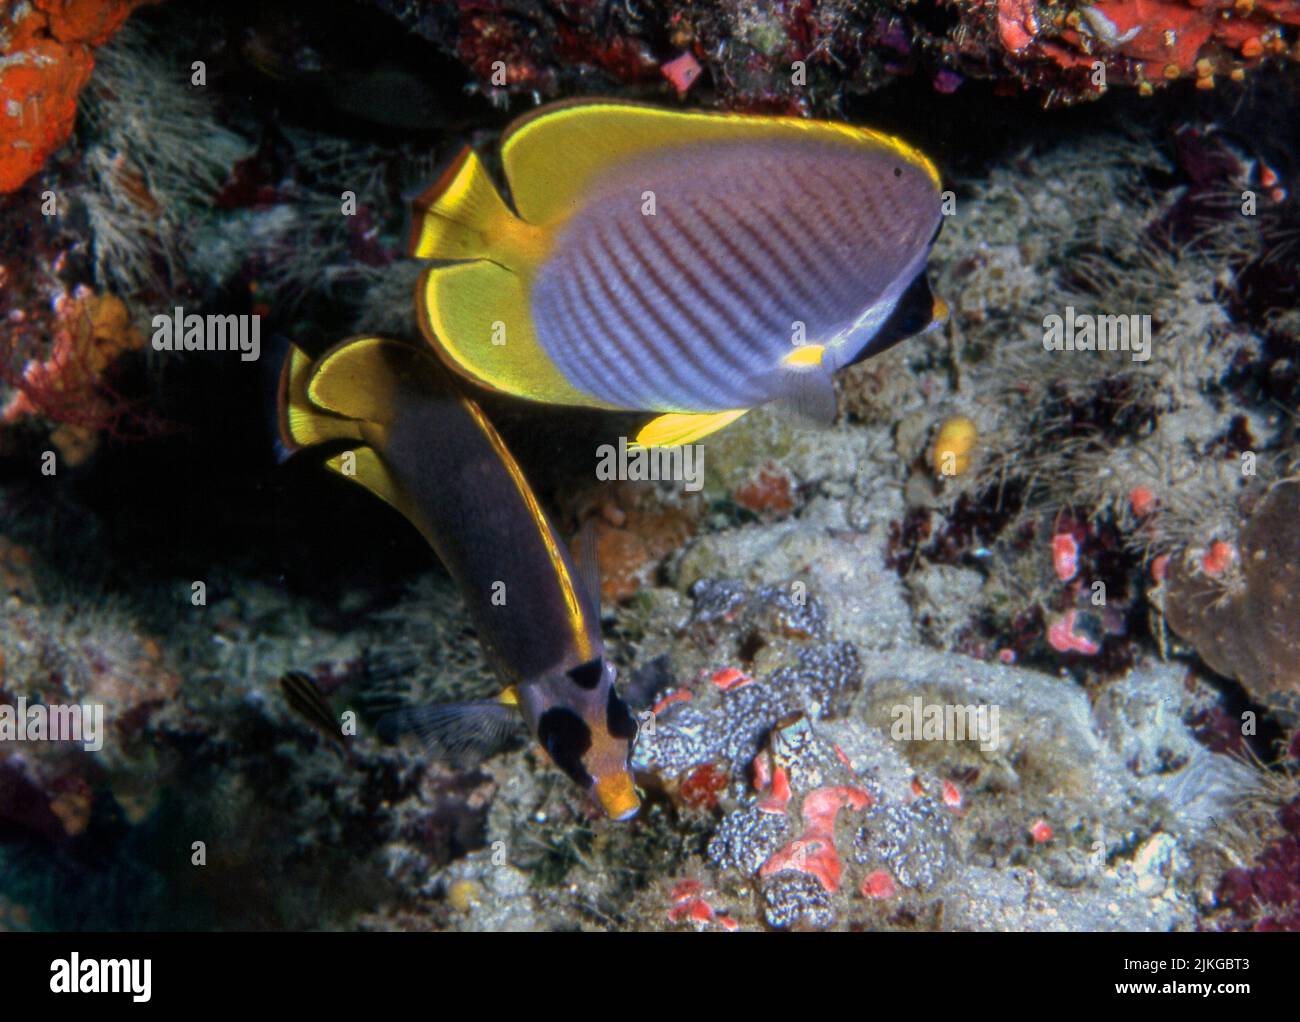 Pair of Philippine Butterflyfish (Chaetodon adiergastos) from Cabilao, the Philippines. Stock Photo